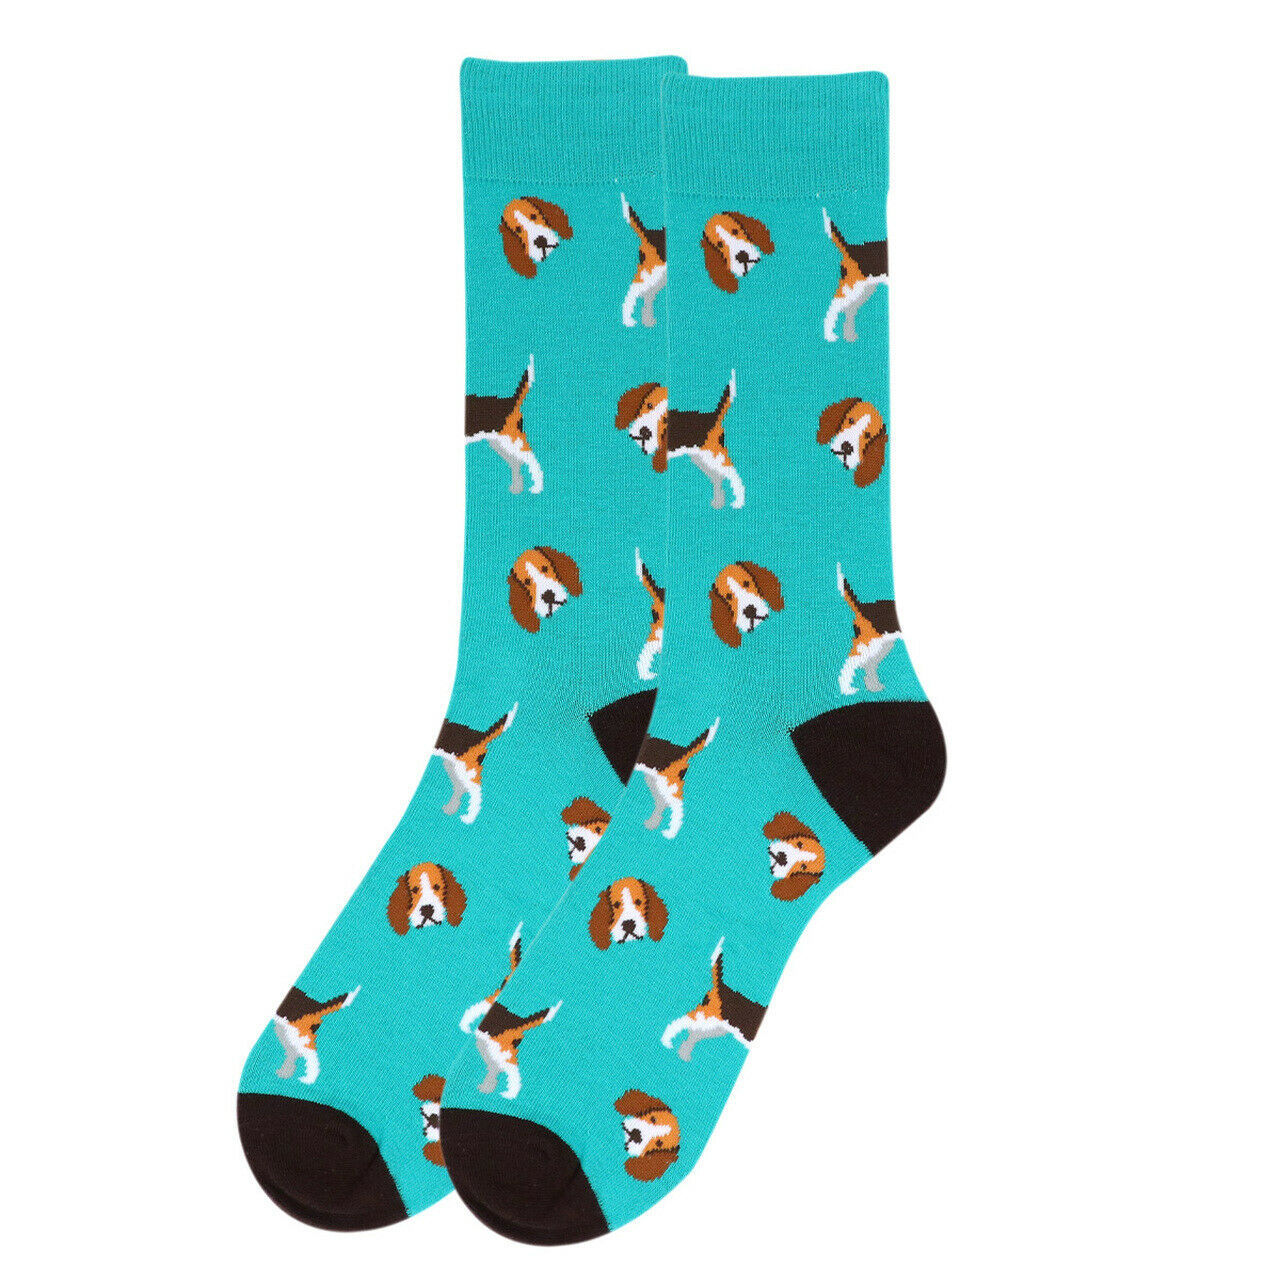 Parquet Men's Crew Novelty Socks Beagle Dog Shoe Size 6-12.5 Green Color New